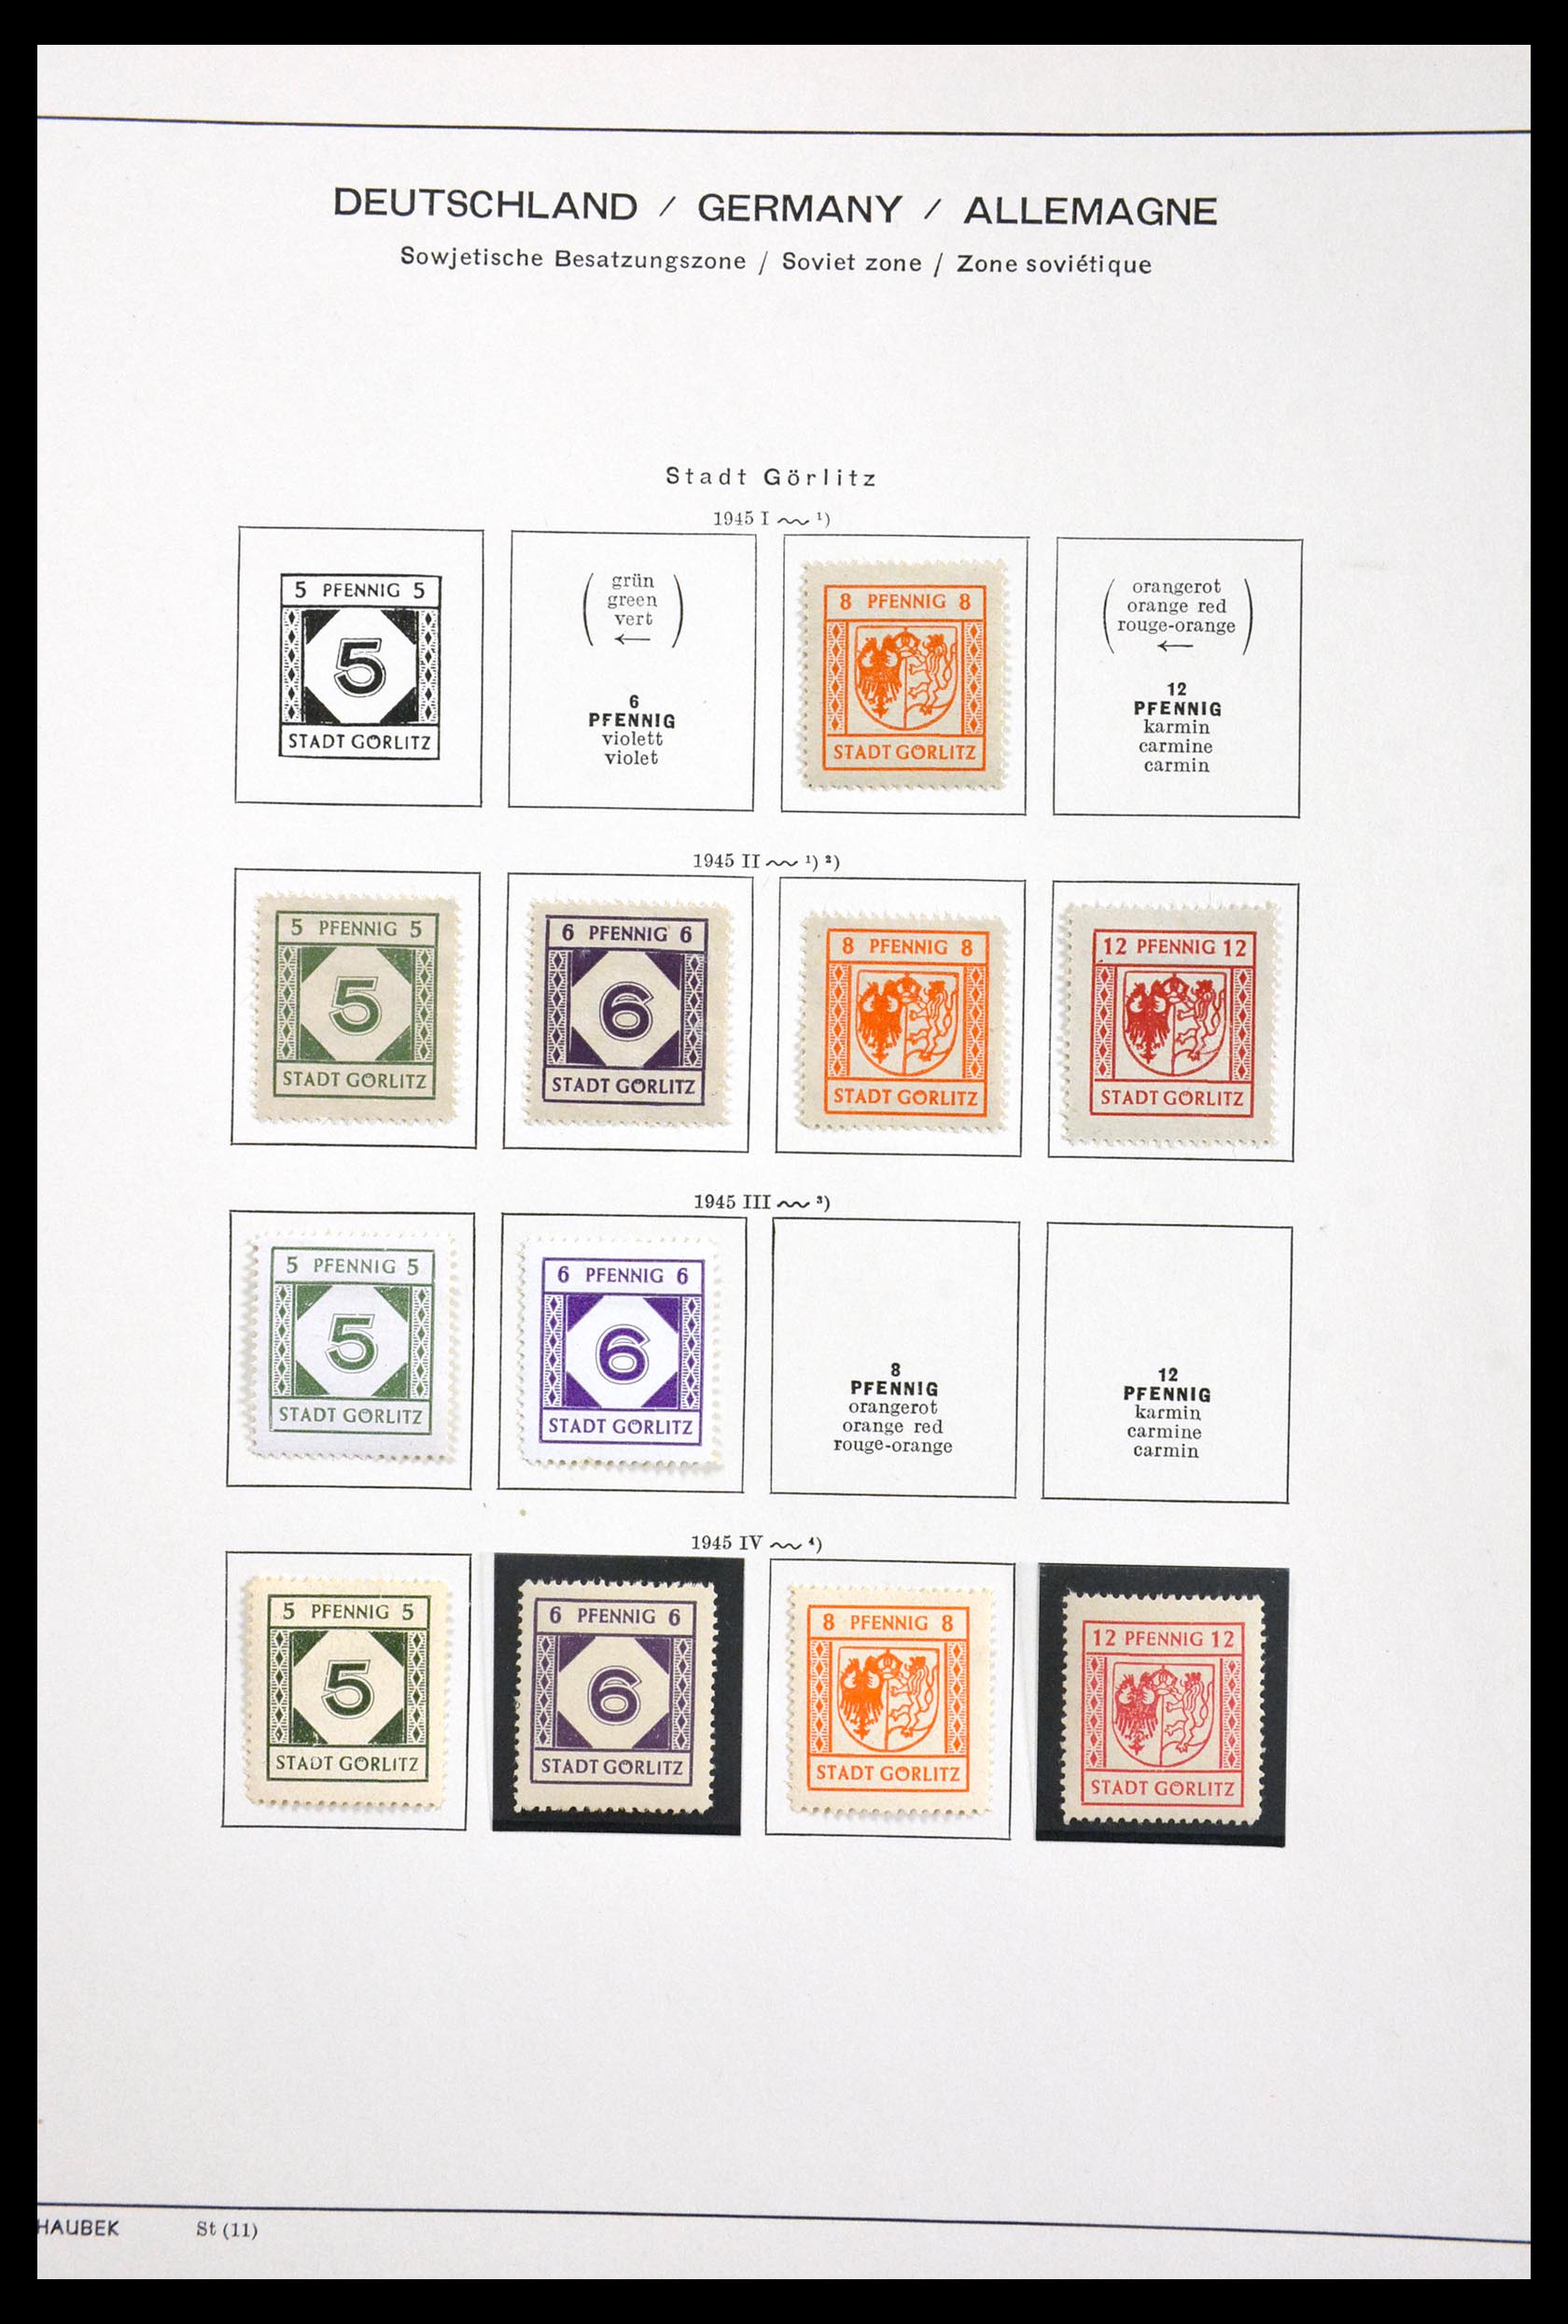 29731 034 - 29731 Local stamps Sovjetzone 1945-1949.